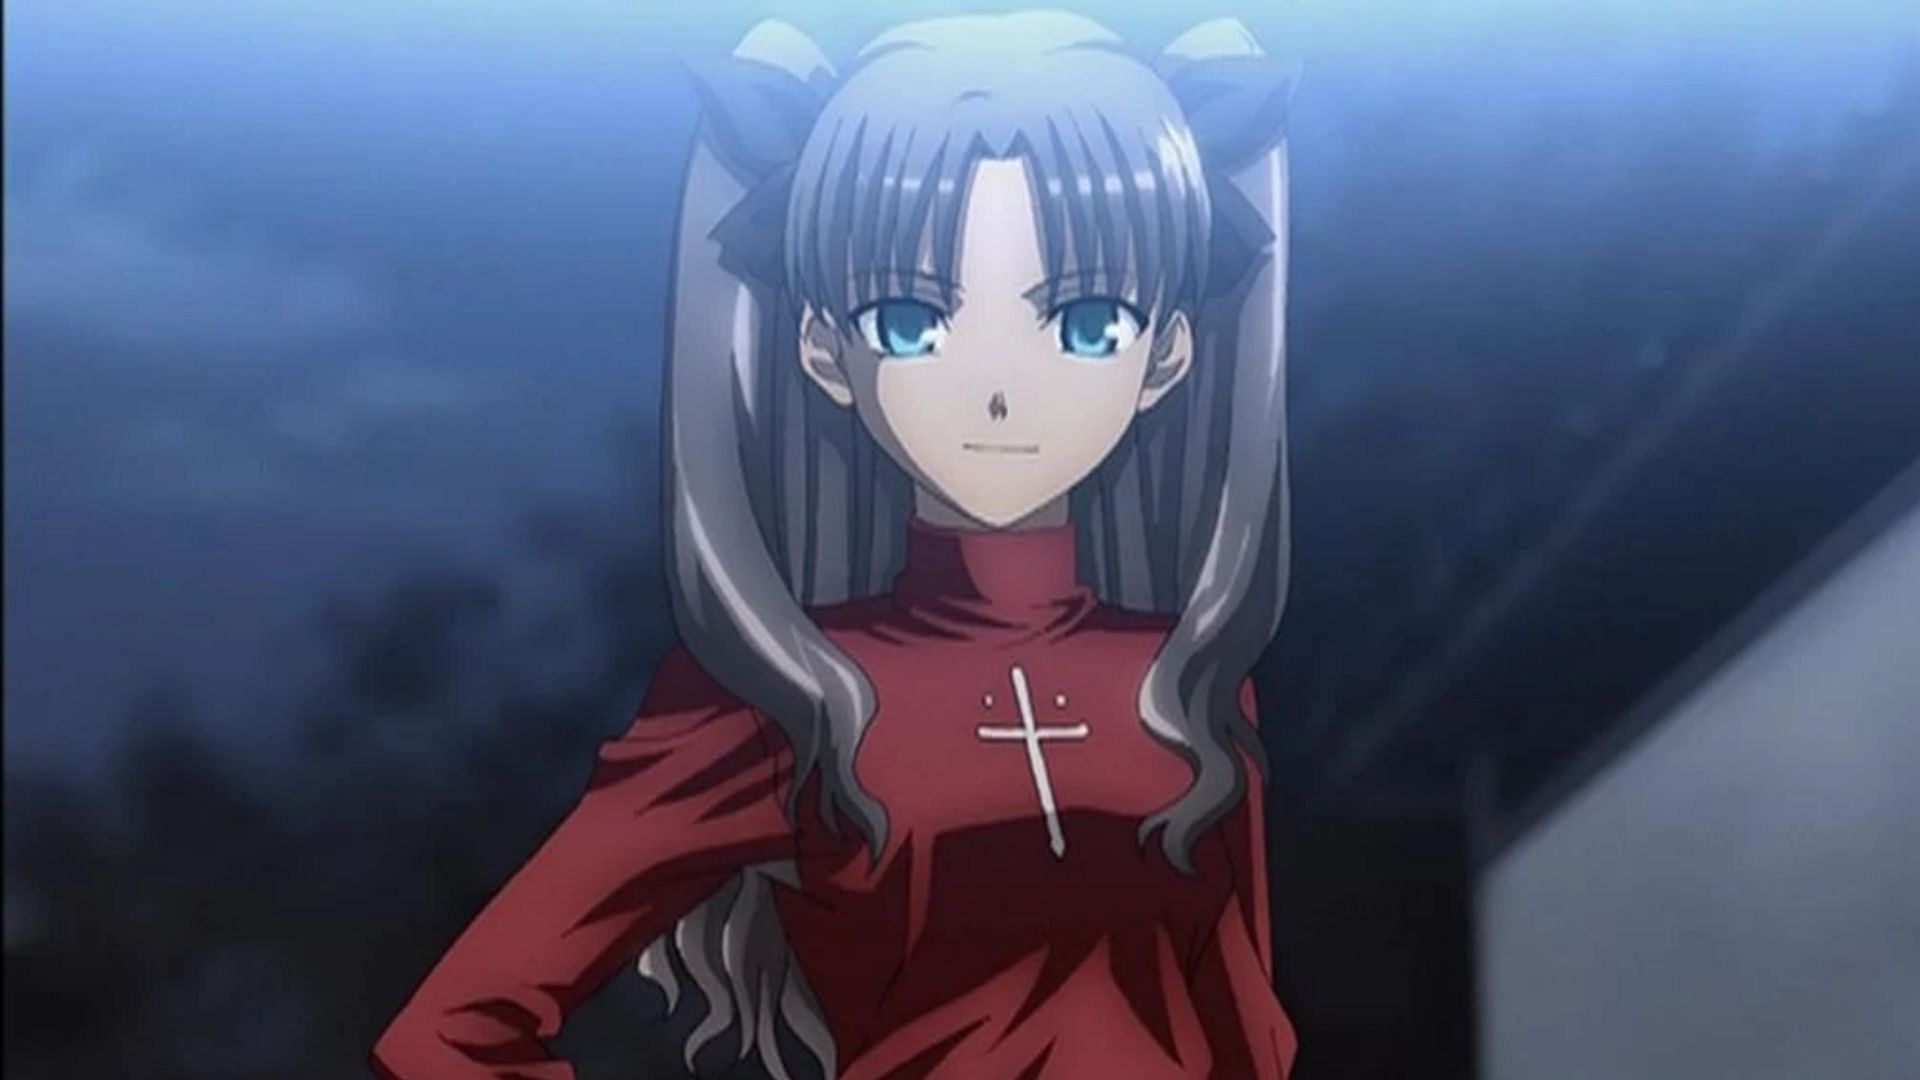 Her appearance in the original anime (Image via Studio Deen)